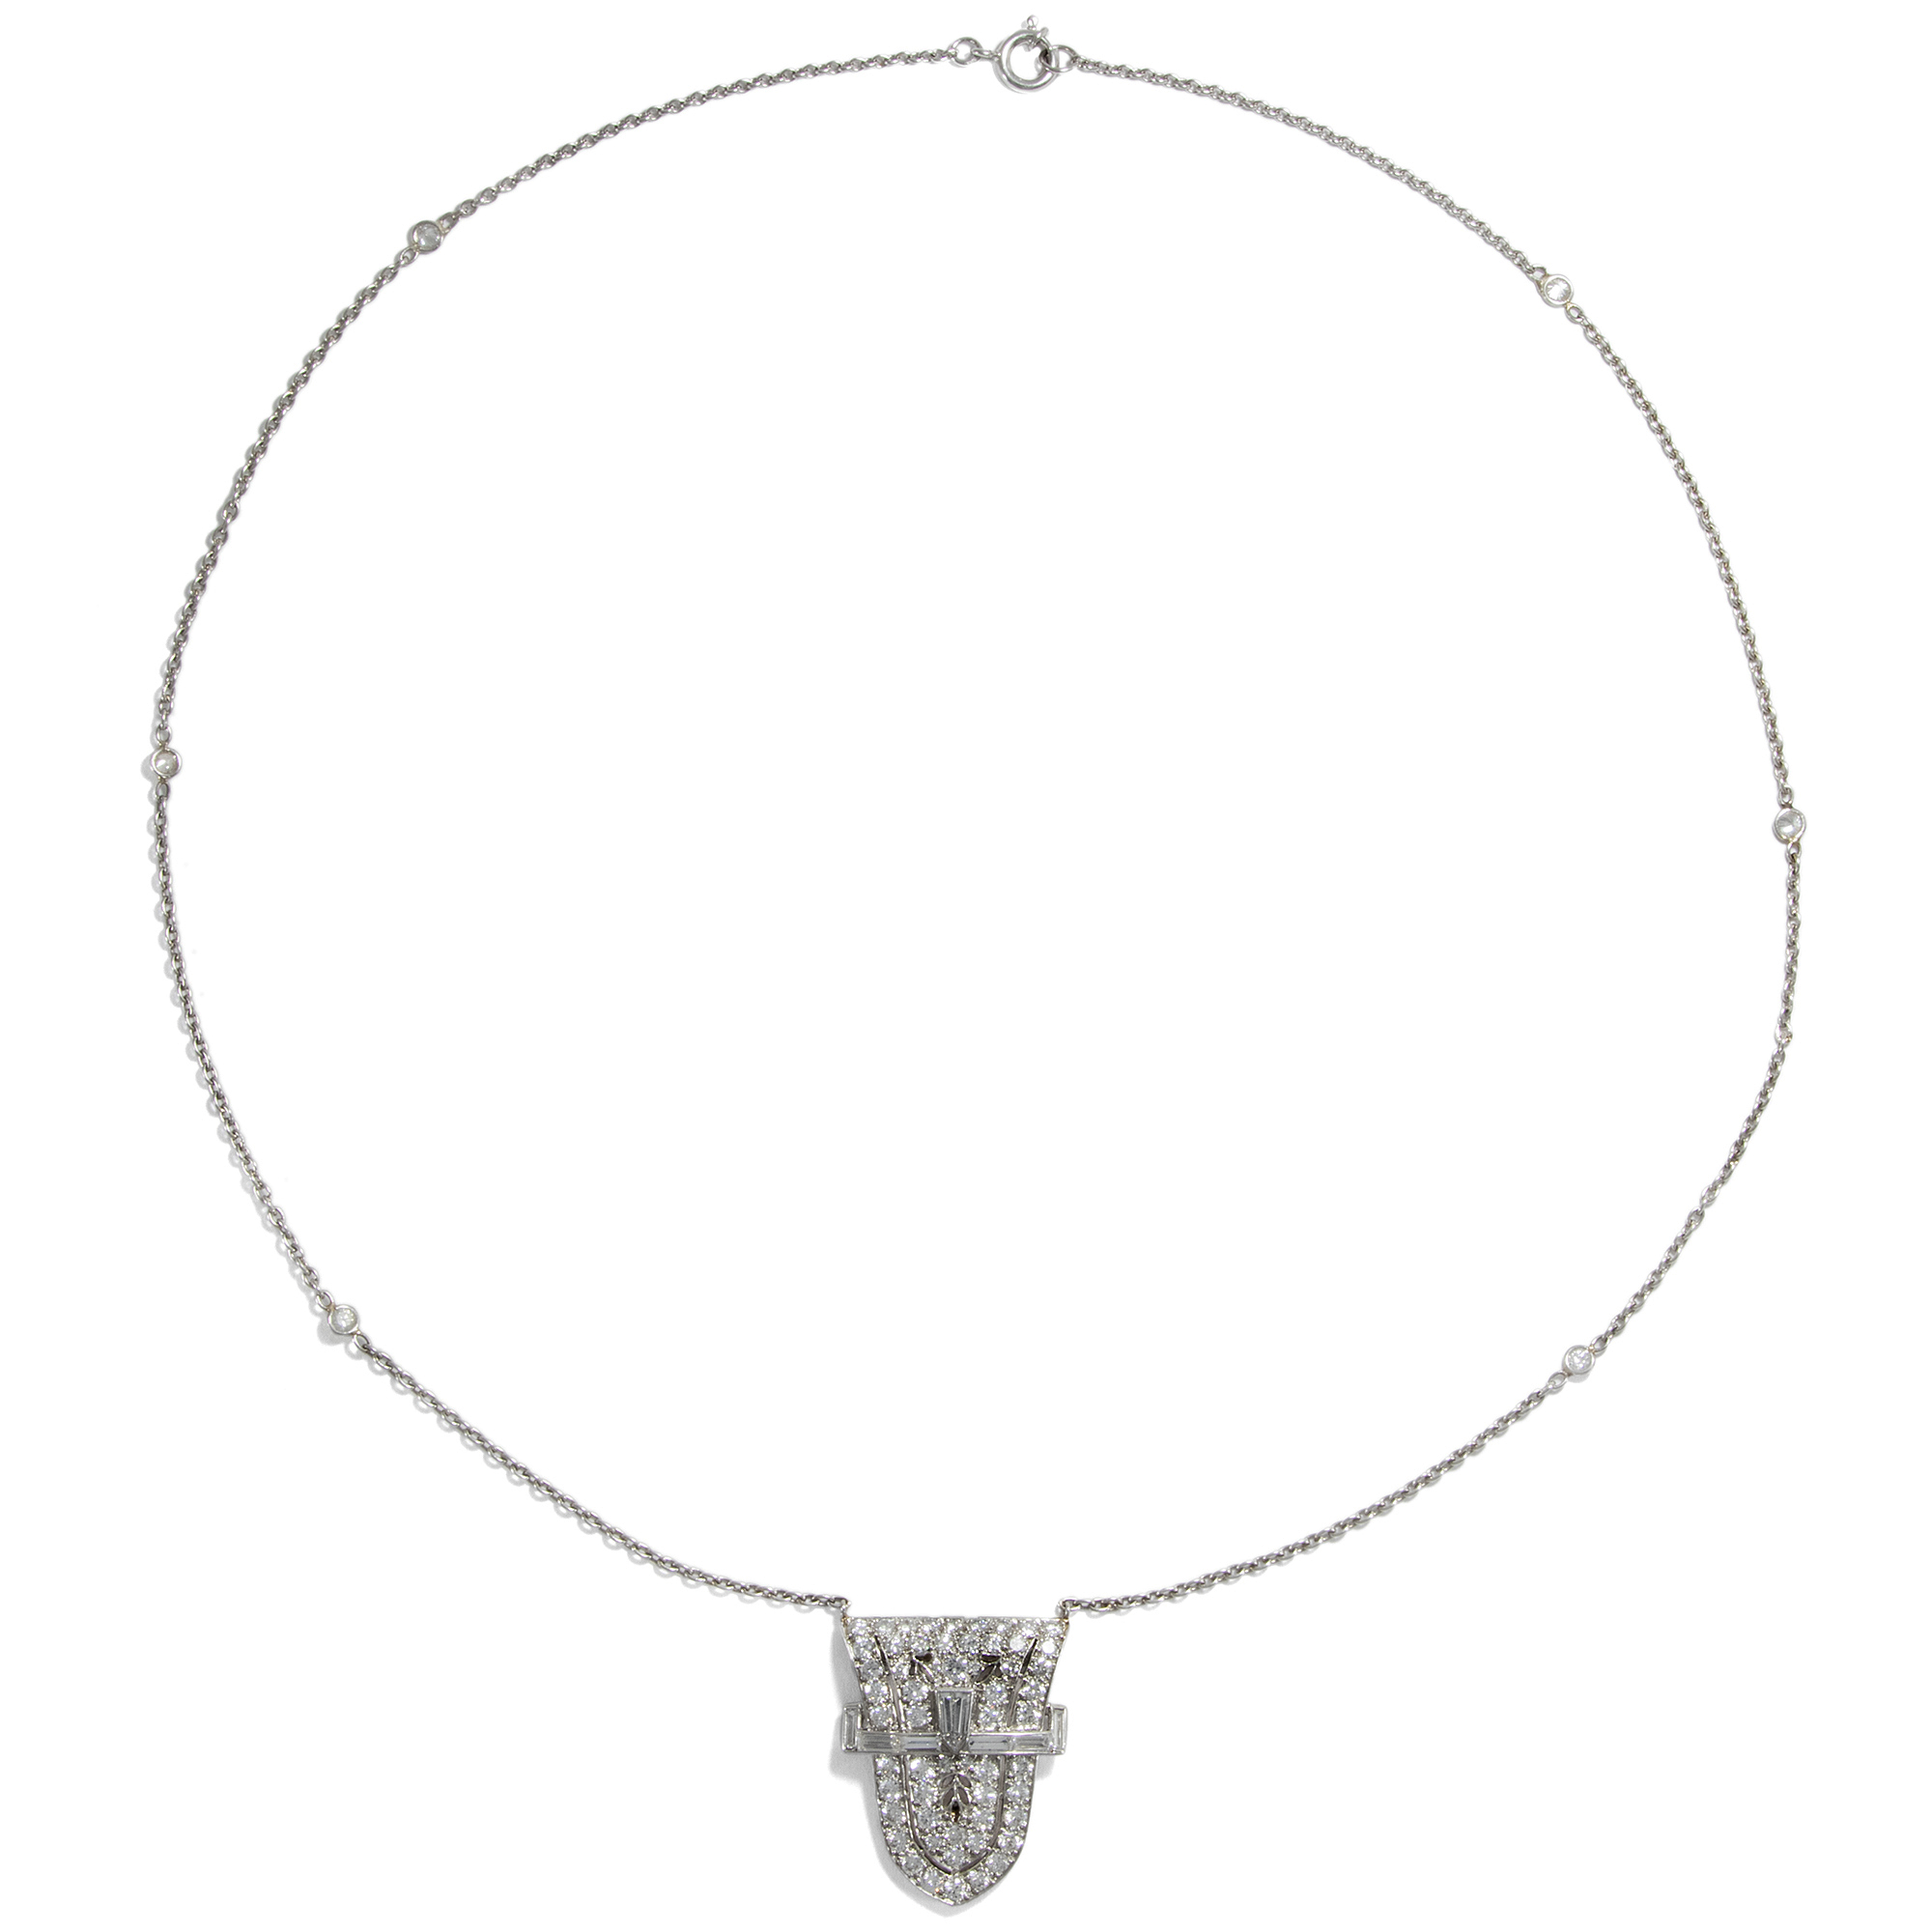 Elegant Art Deco Necklace in Platinum & 2.83 ct of First Class Diamonds, ca. 1930 & Later